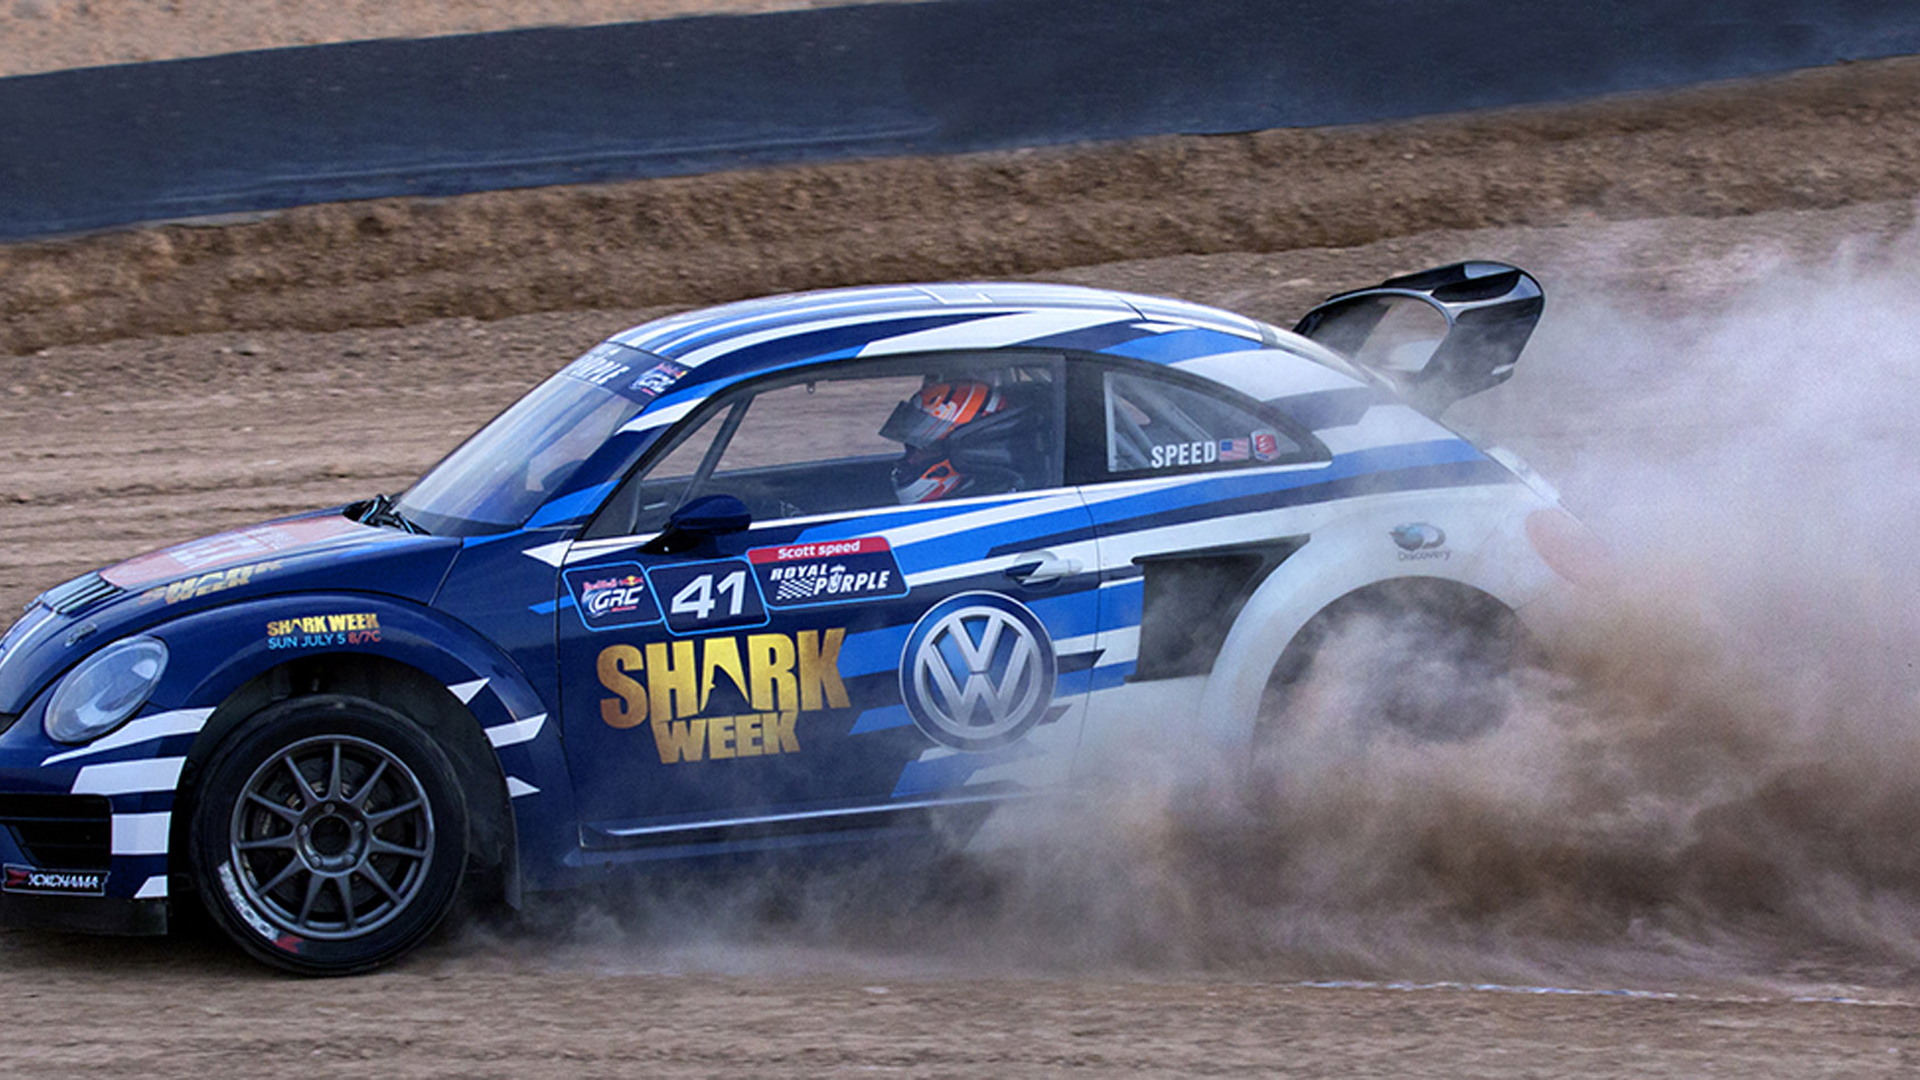 Scott Speed and his Shark Week-themed 2015 Volkswagen Beetle Global Rallycross Championship car